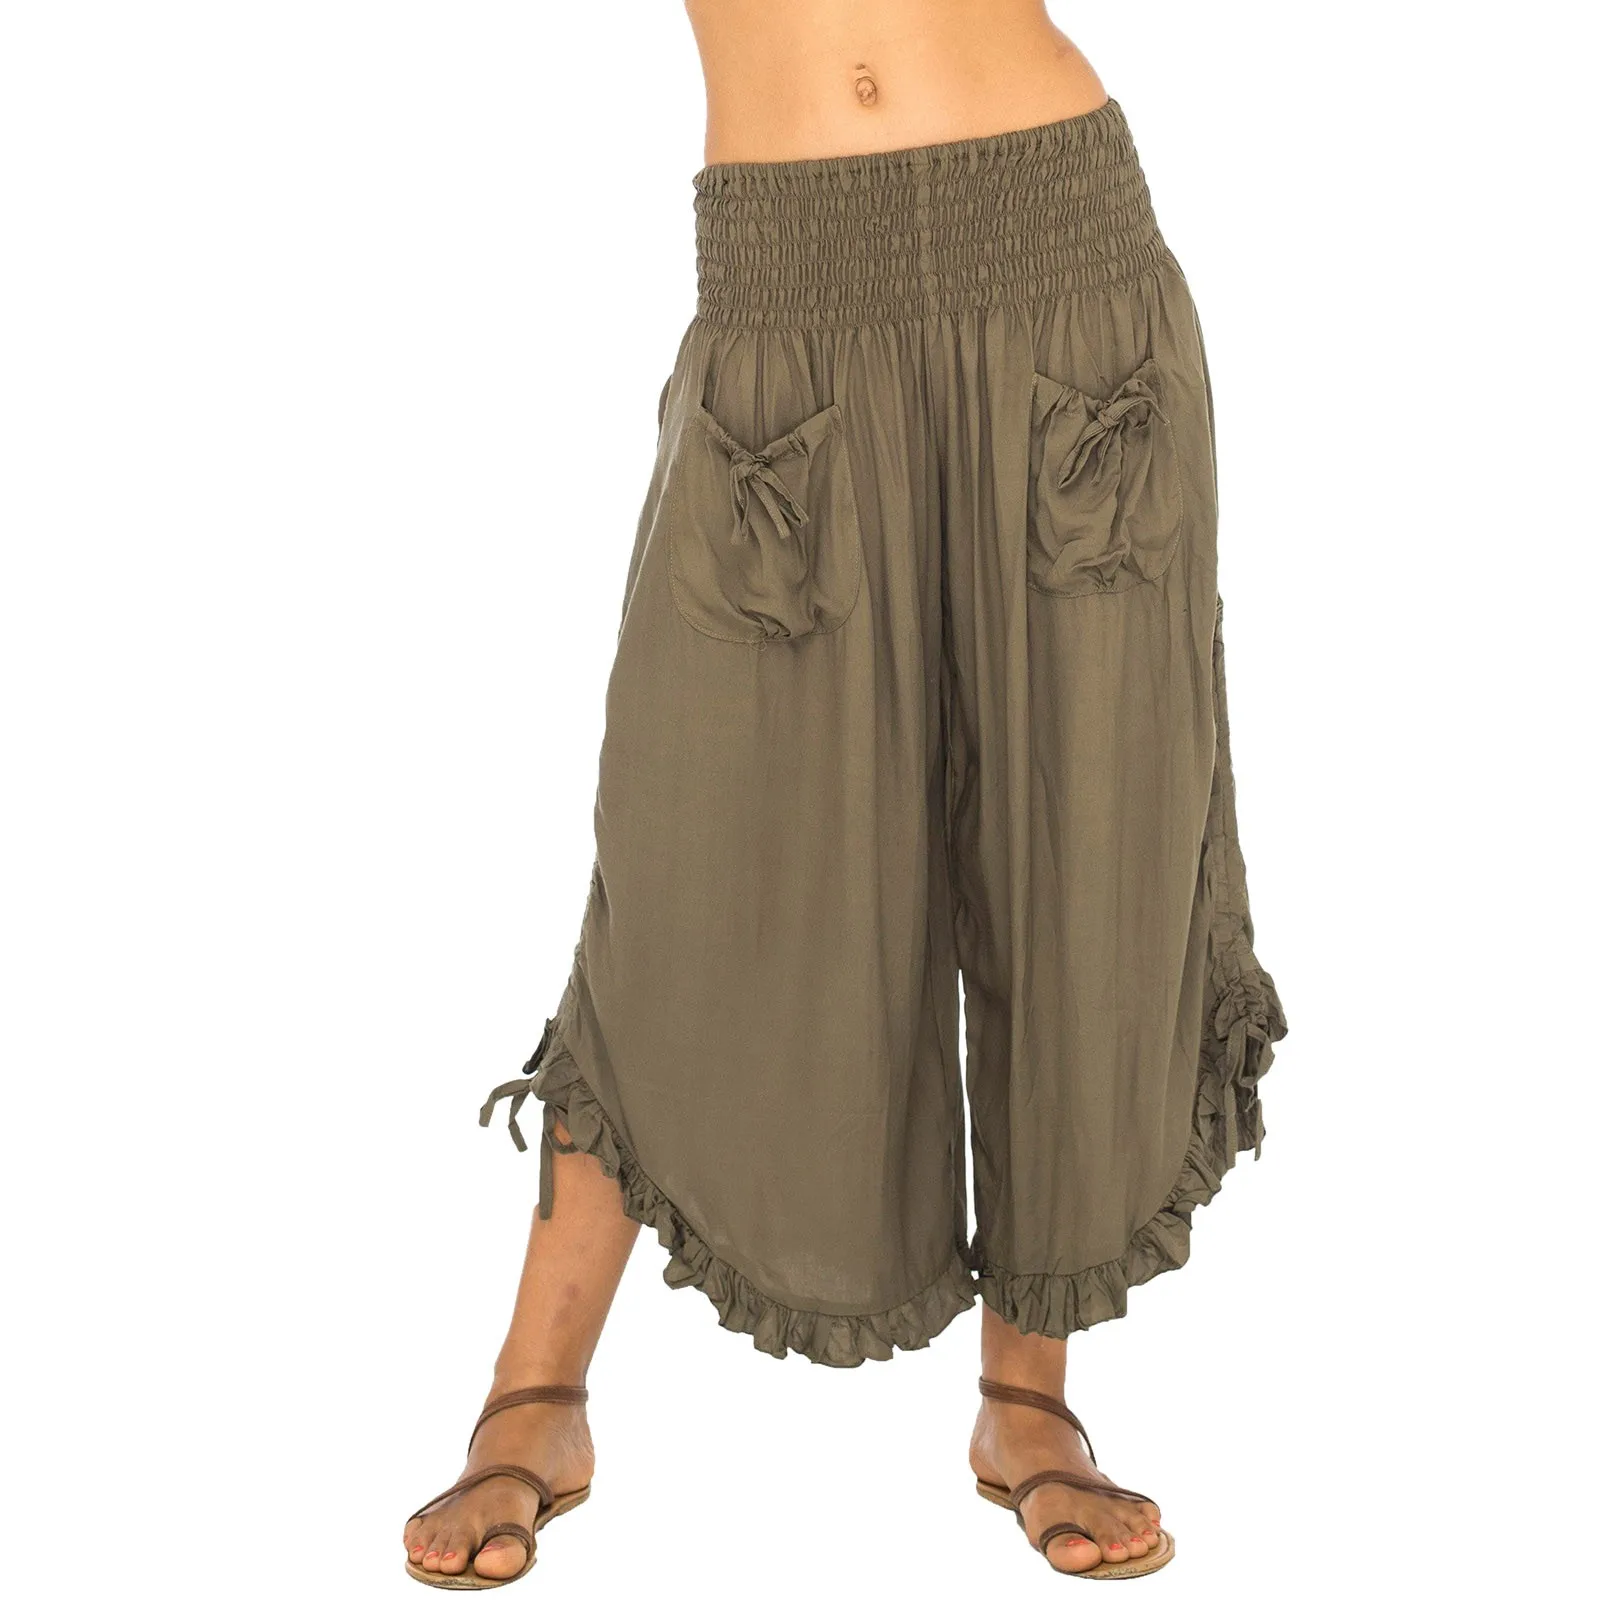 2023 New Women's Loose Wide-leg Pants Summer Cotton Linen Calf-Length Pants Solid Color Drawstring Casual Sweatpants Trousers